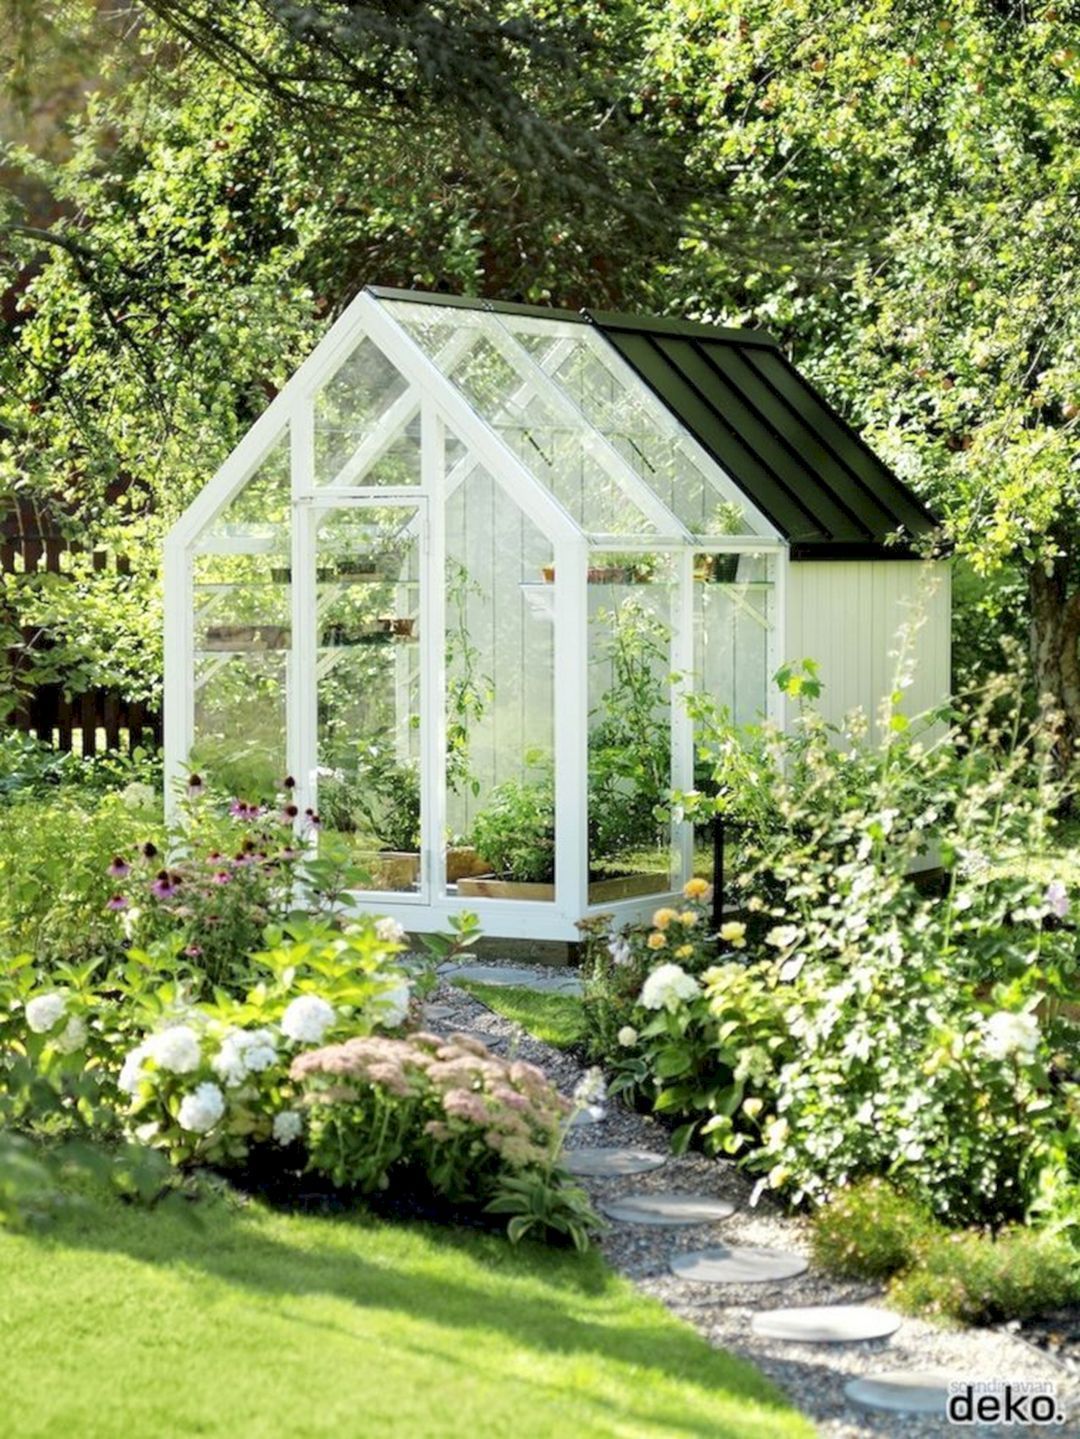 30 Beautiful Backyard Garden Design With Small Greenhouse Ideas -   16 garden design Small greenhouses ideas